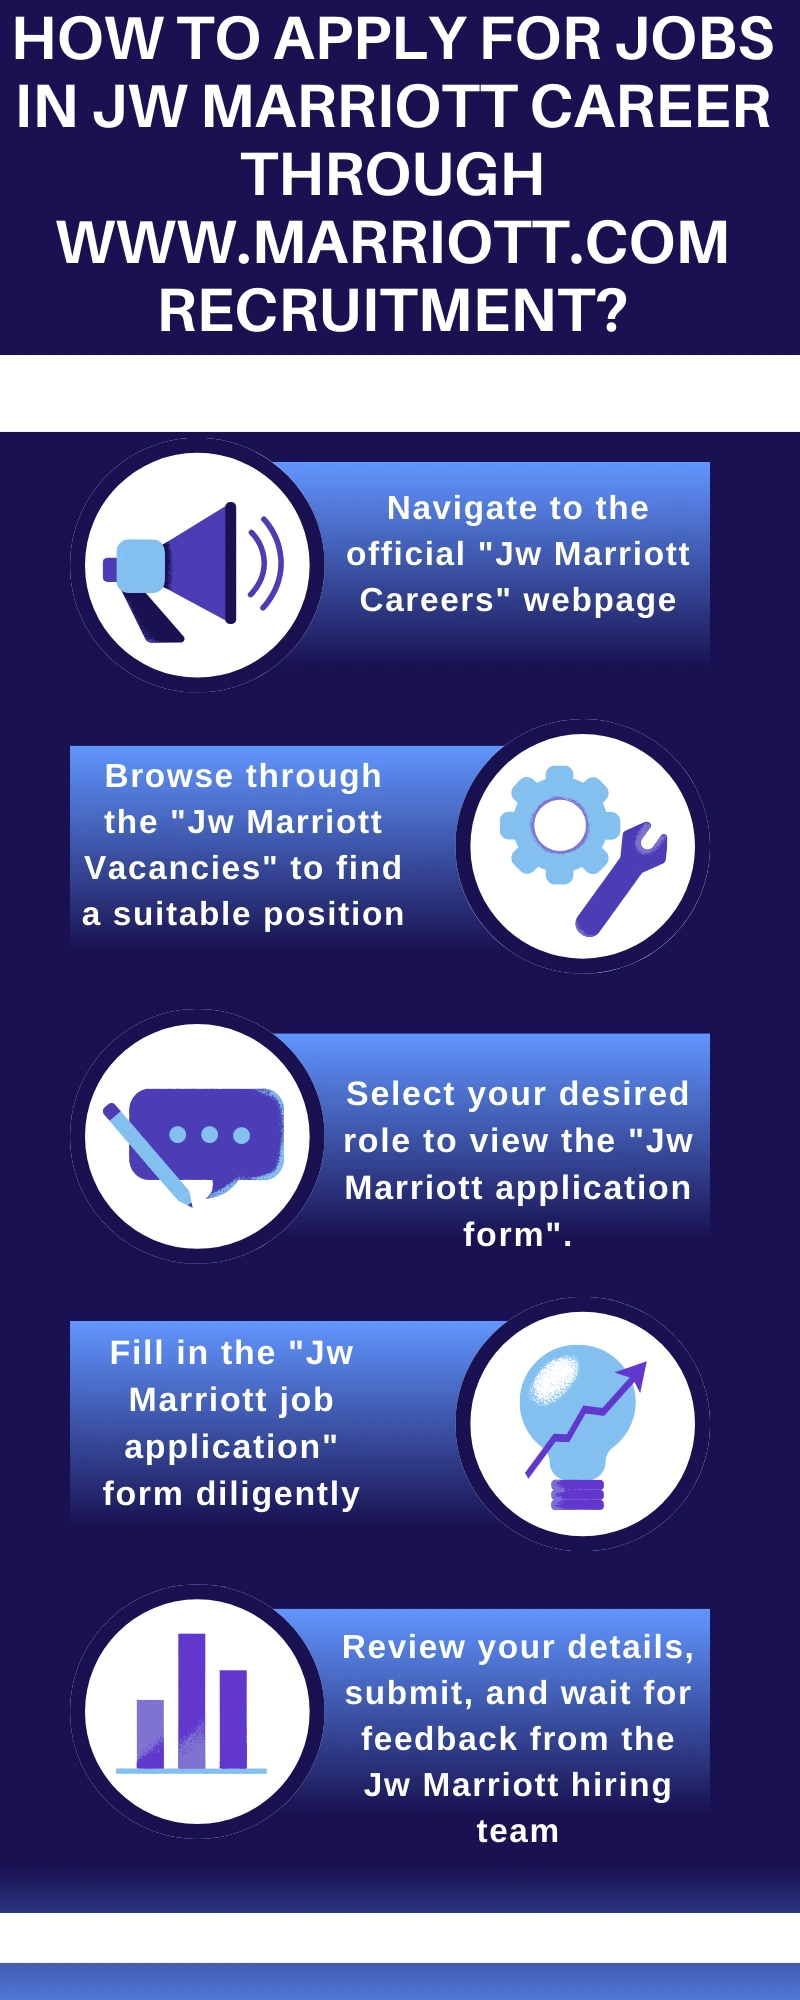 How to Apply for Jobs in Jw Marriott Career through www.marriott.com recruitment?